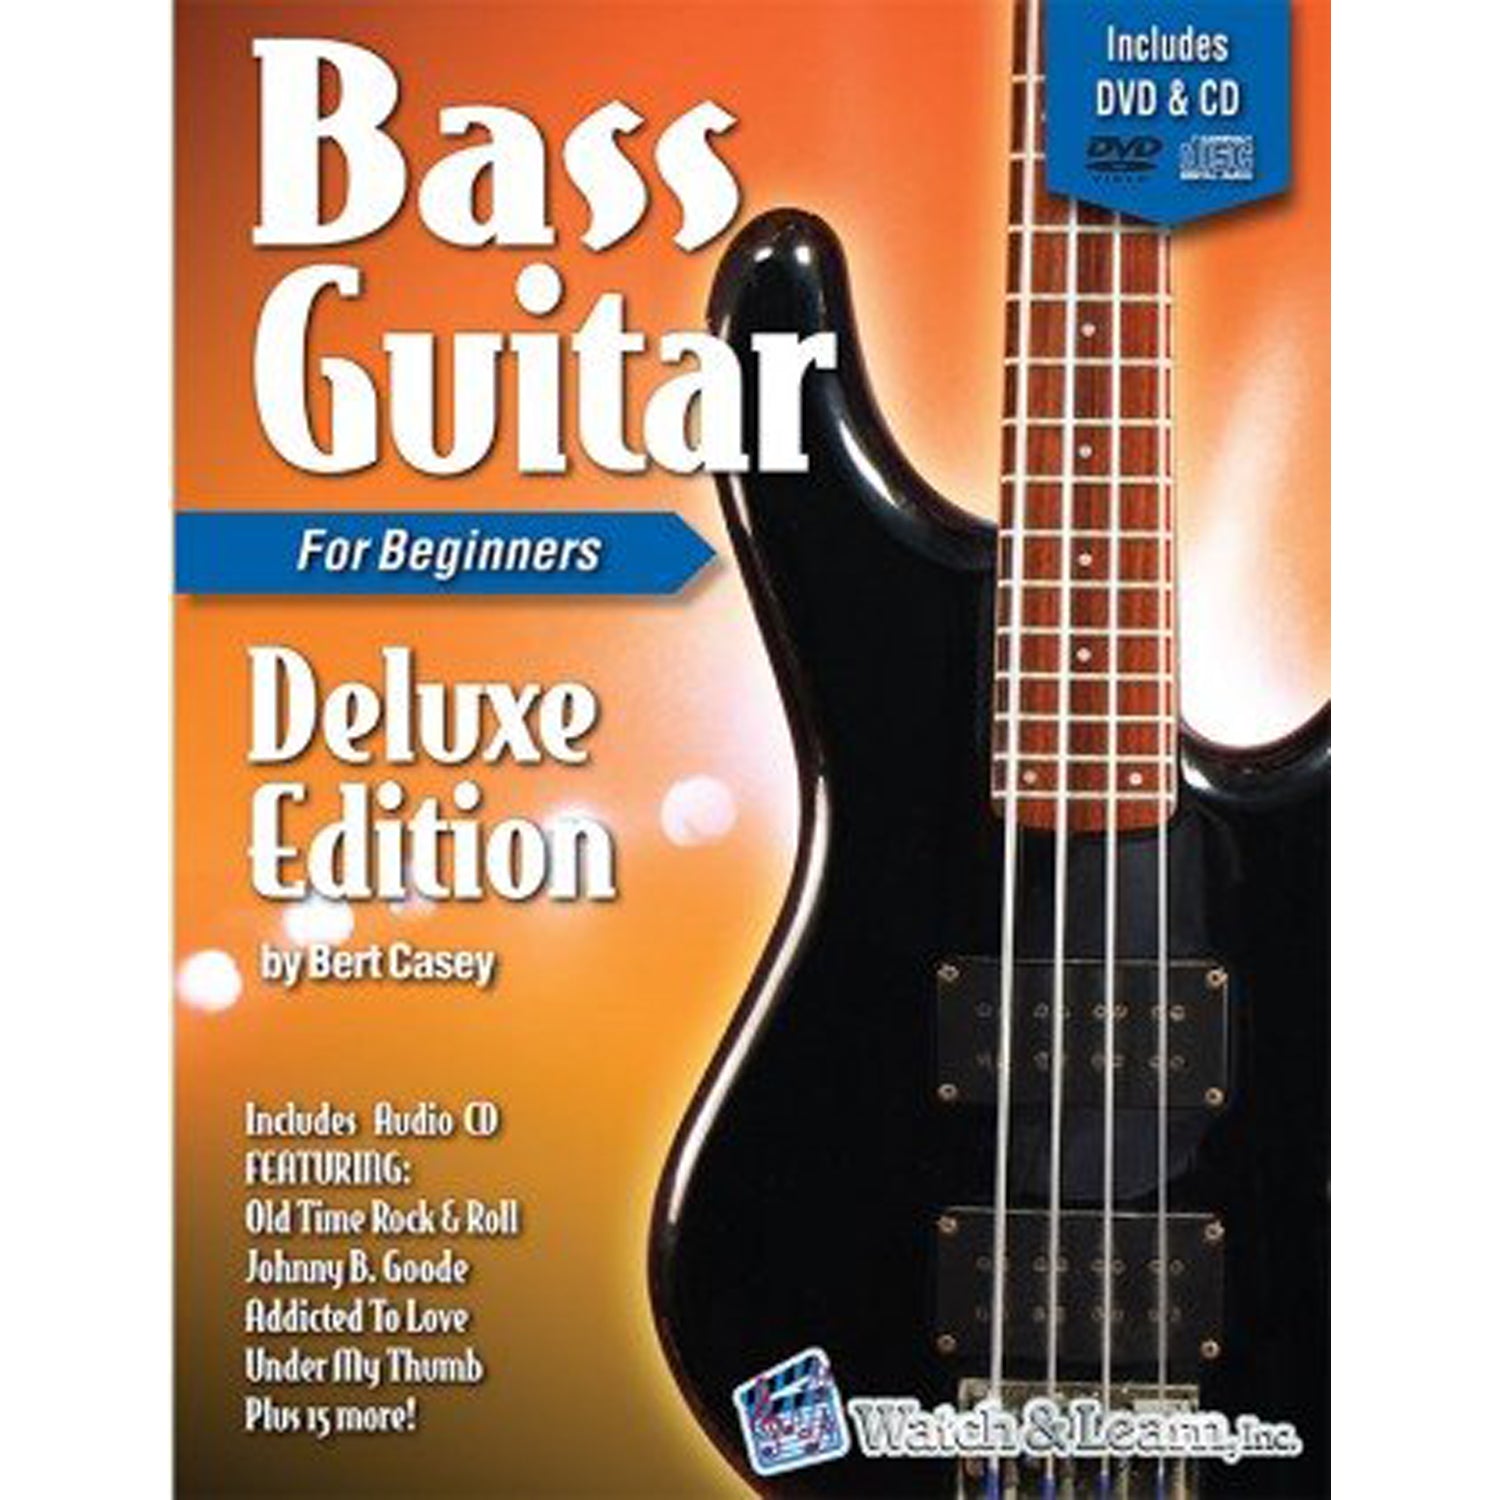 Bass Guitar Deluxe Edition. DVD+CD